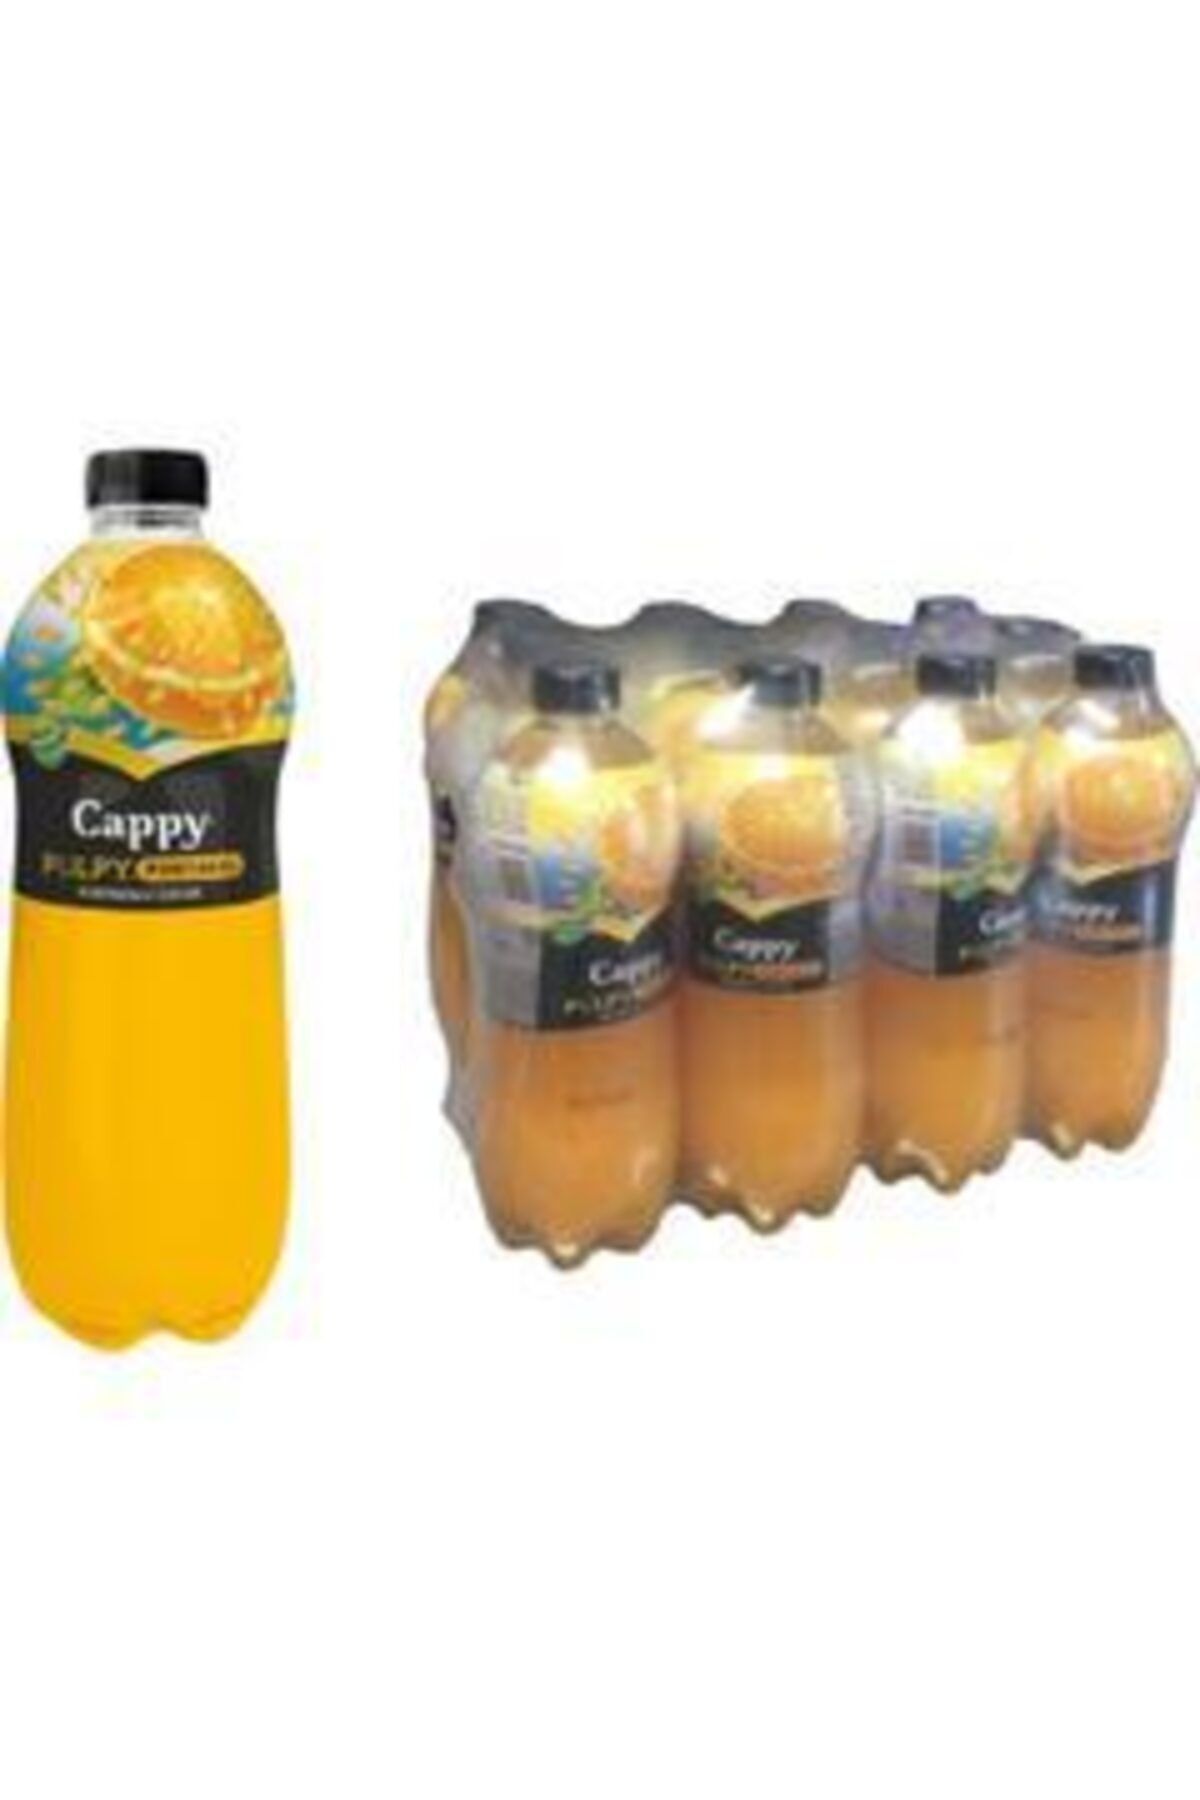 Cappy Pulpy Portakal Parçacıklı Meyve Suyu 1 lt 12 Adet (